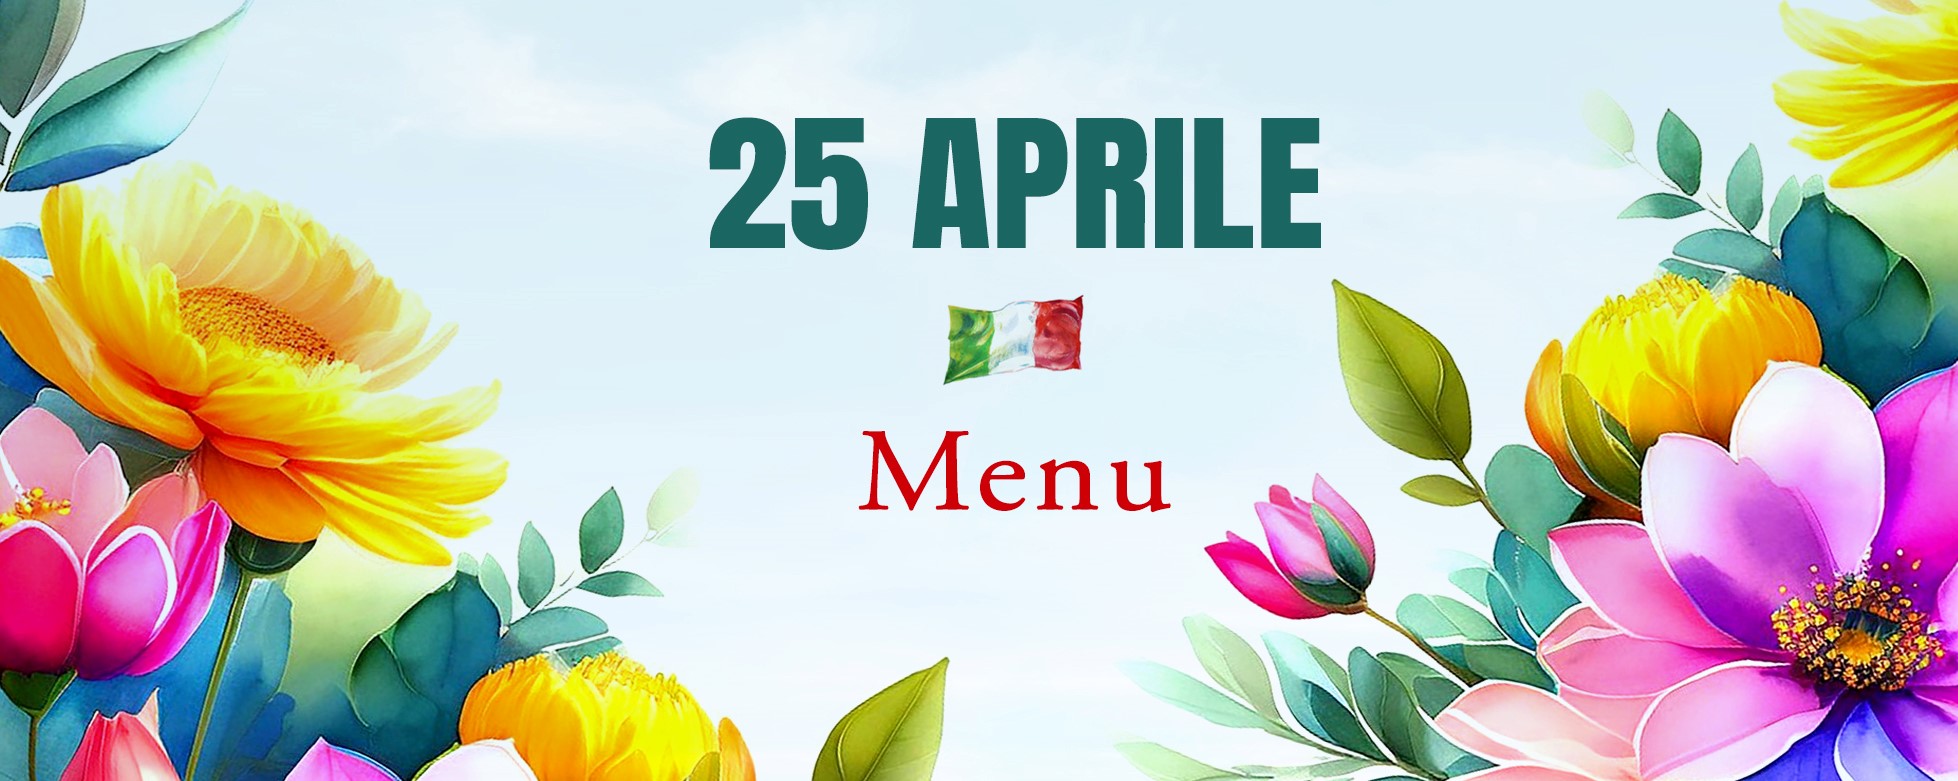 menu idue casali 25 aprile vetralla